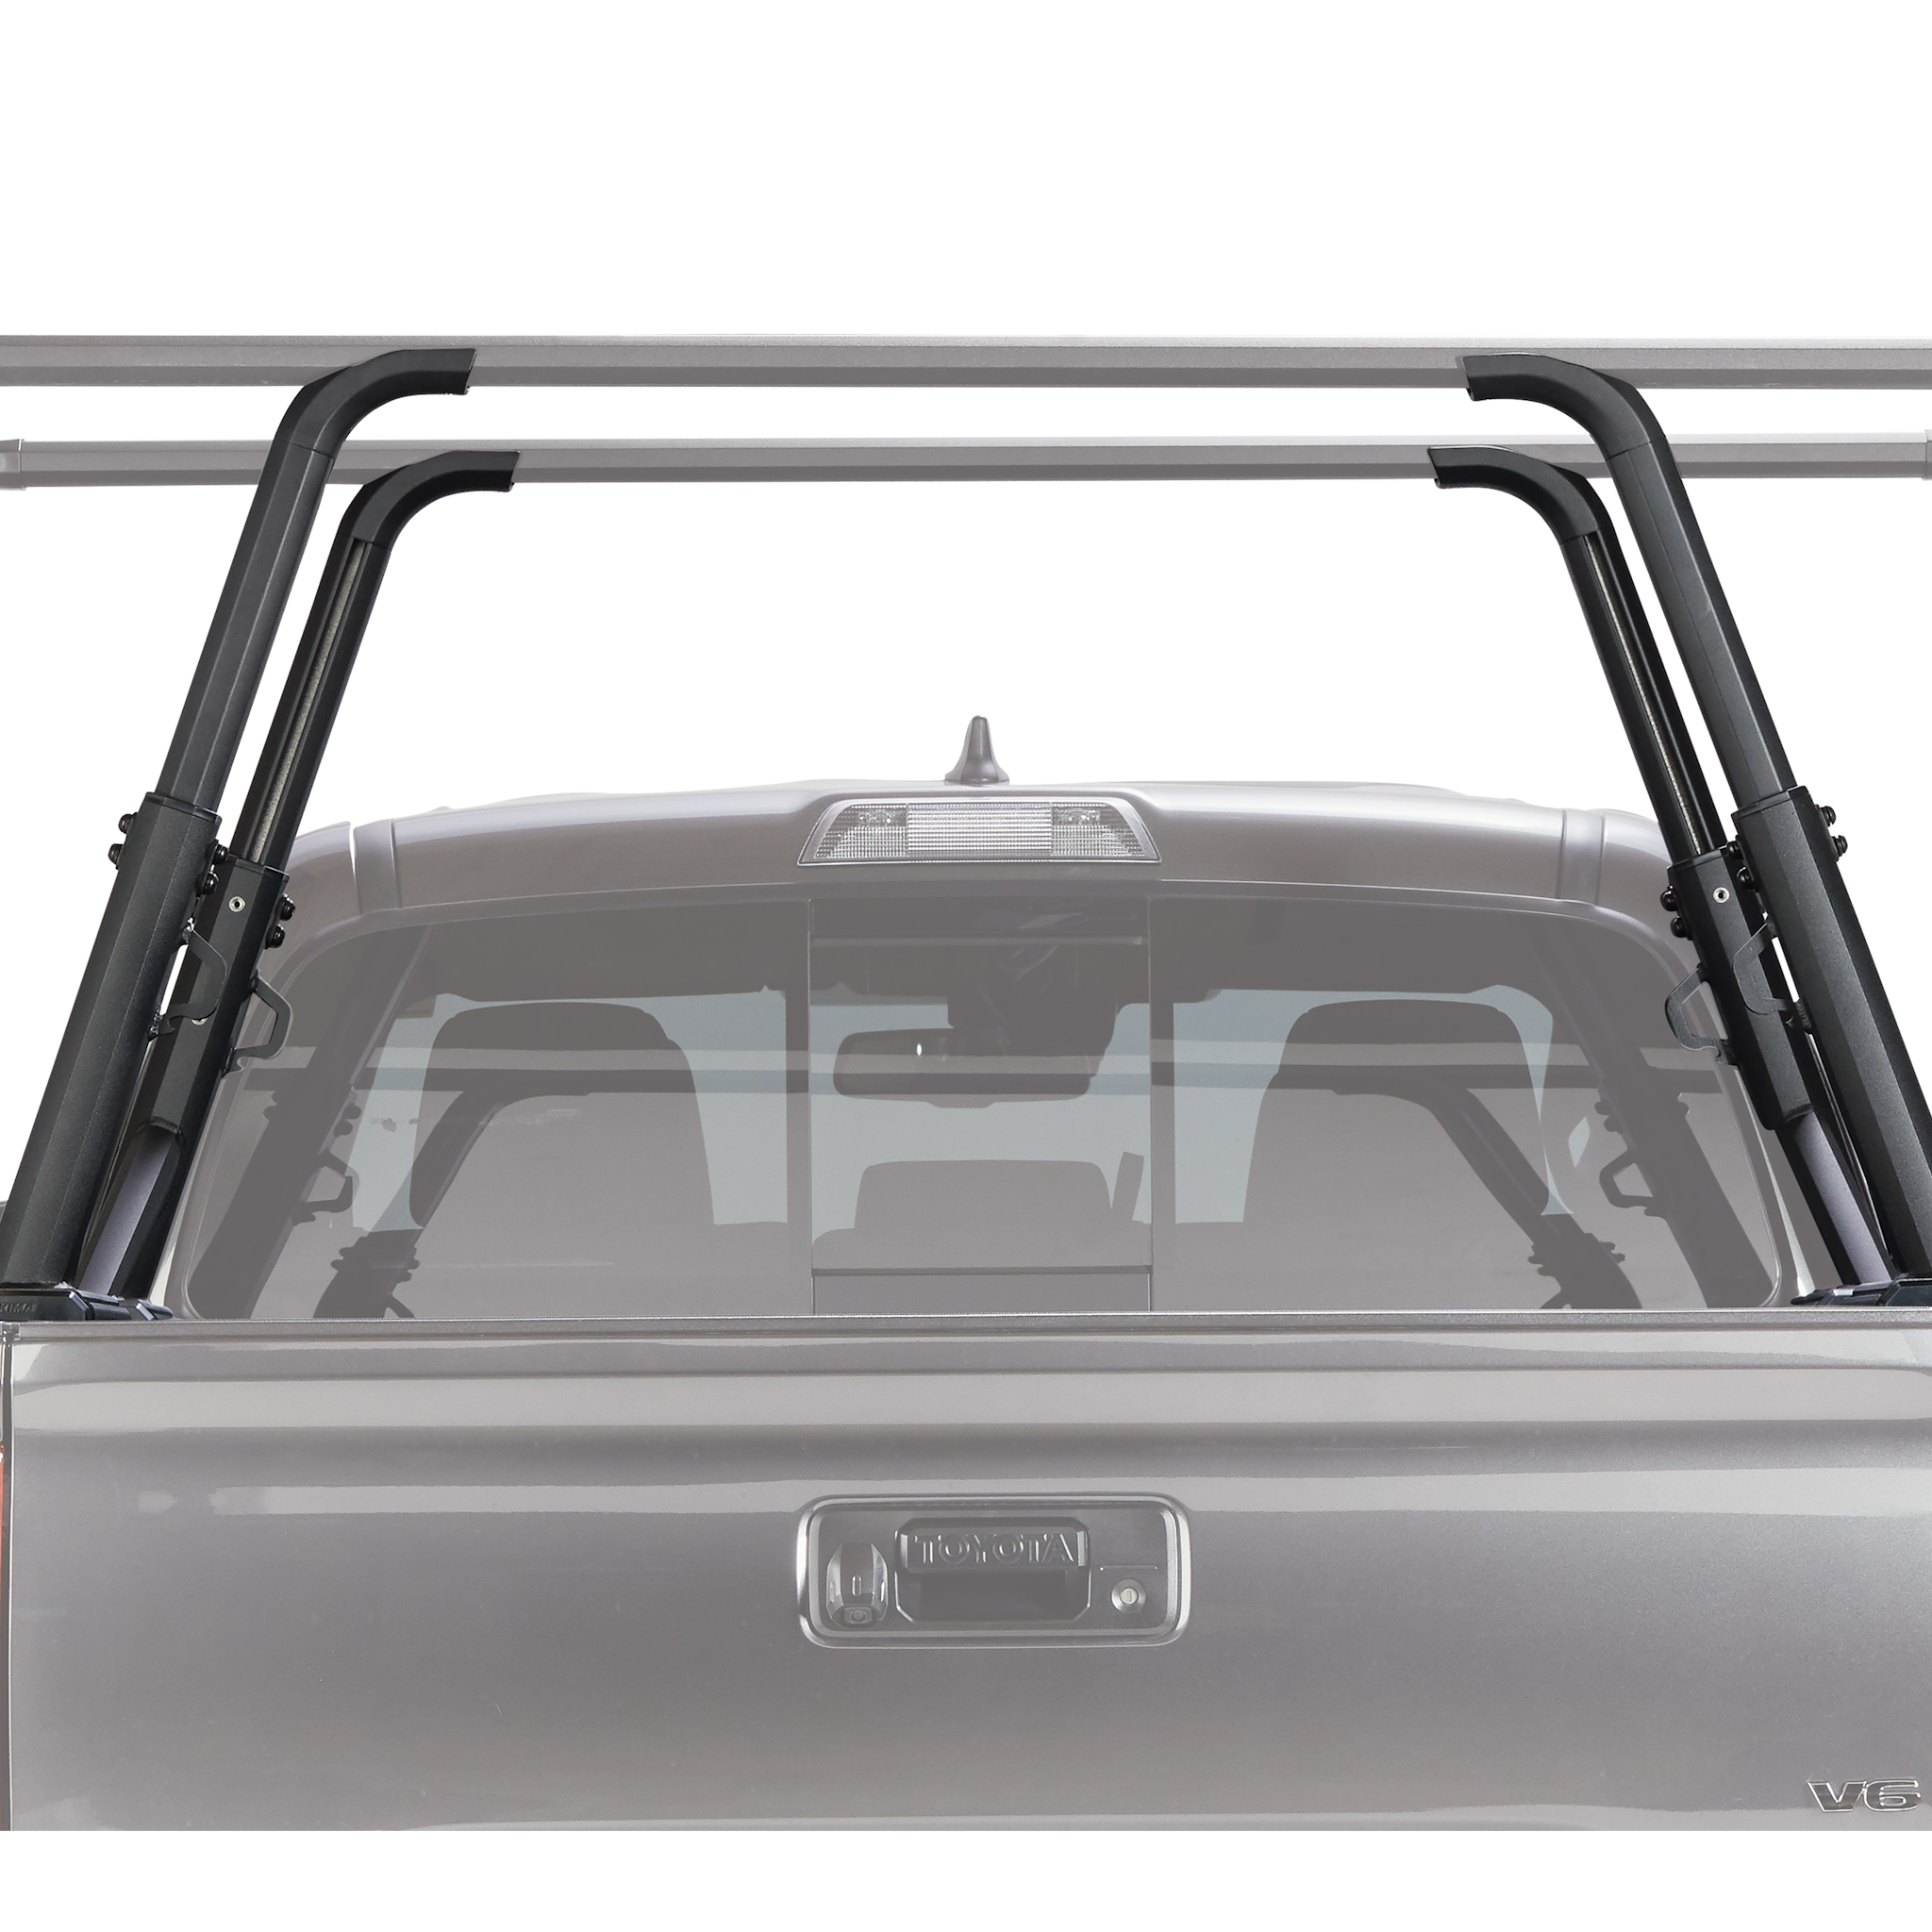 Overhaul HD truck rack rear height adjustability high